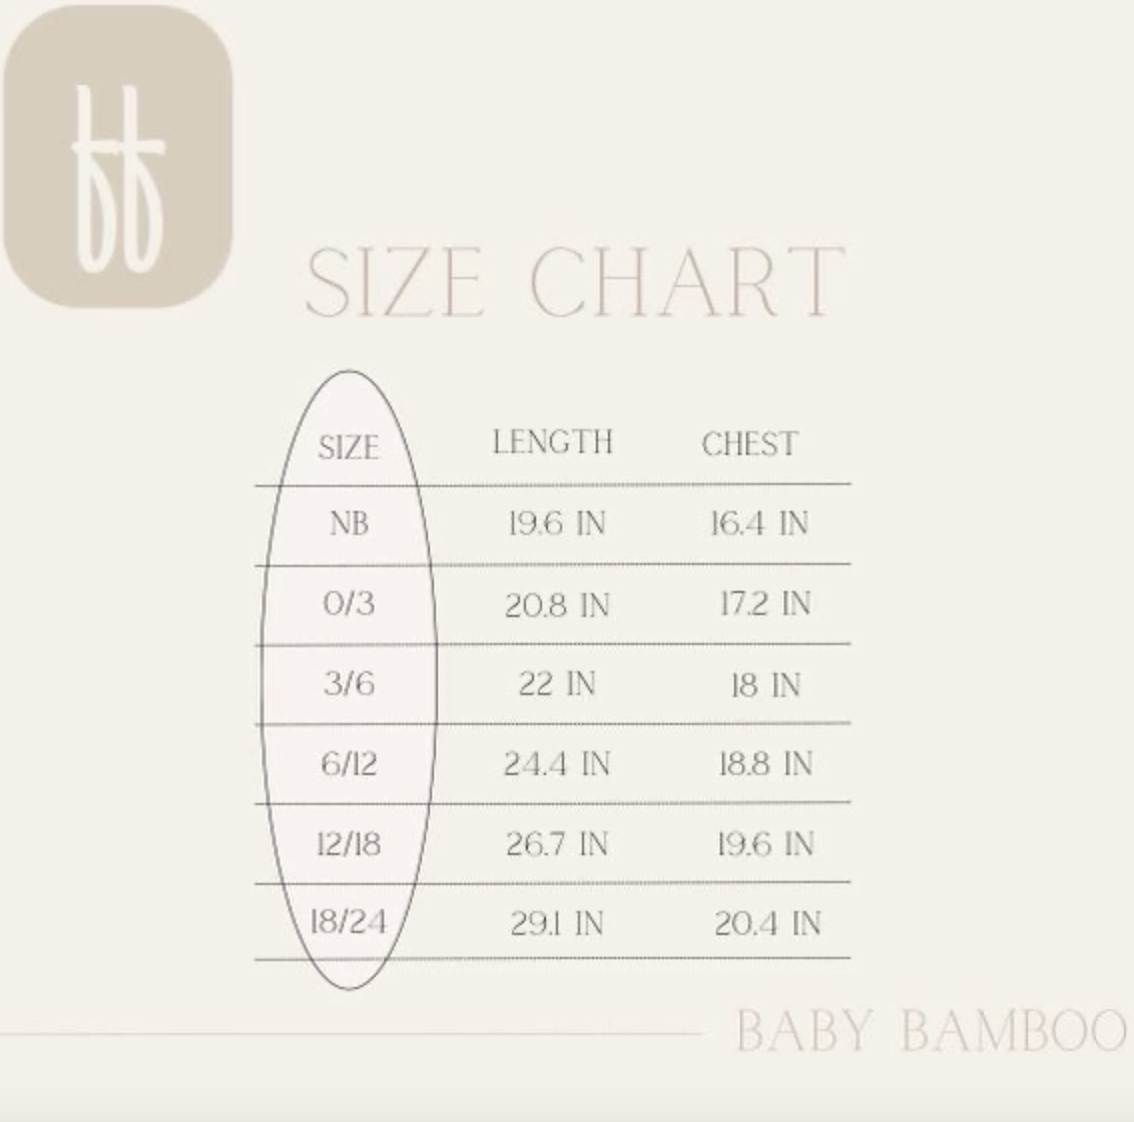 a chart of size chart